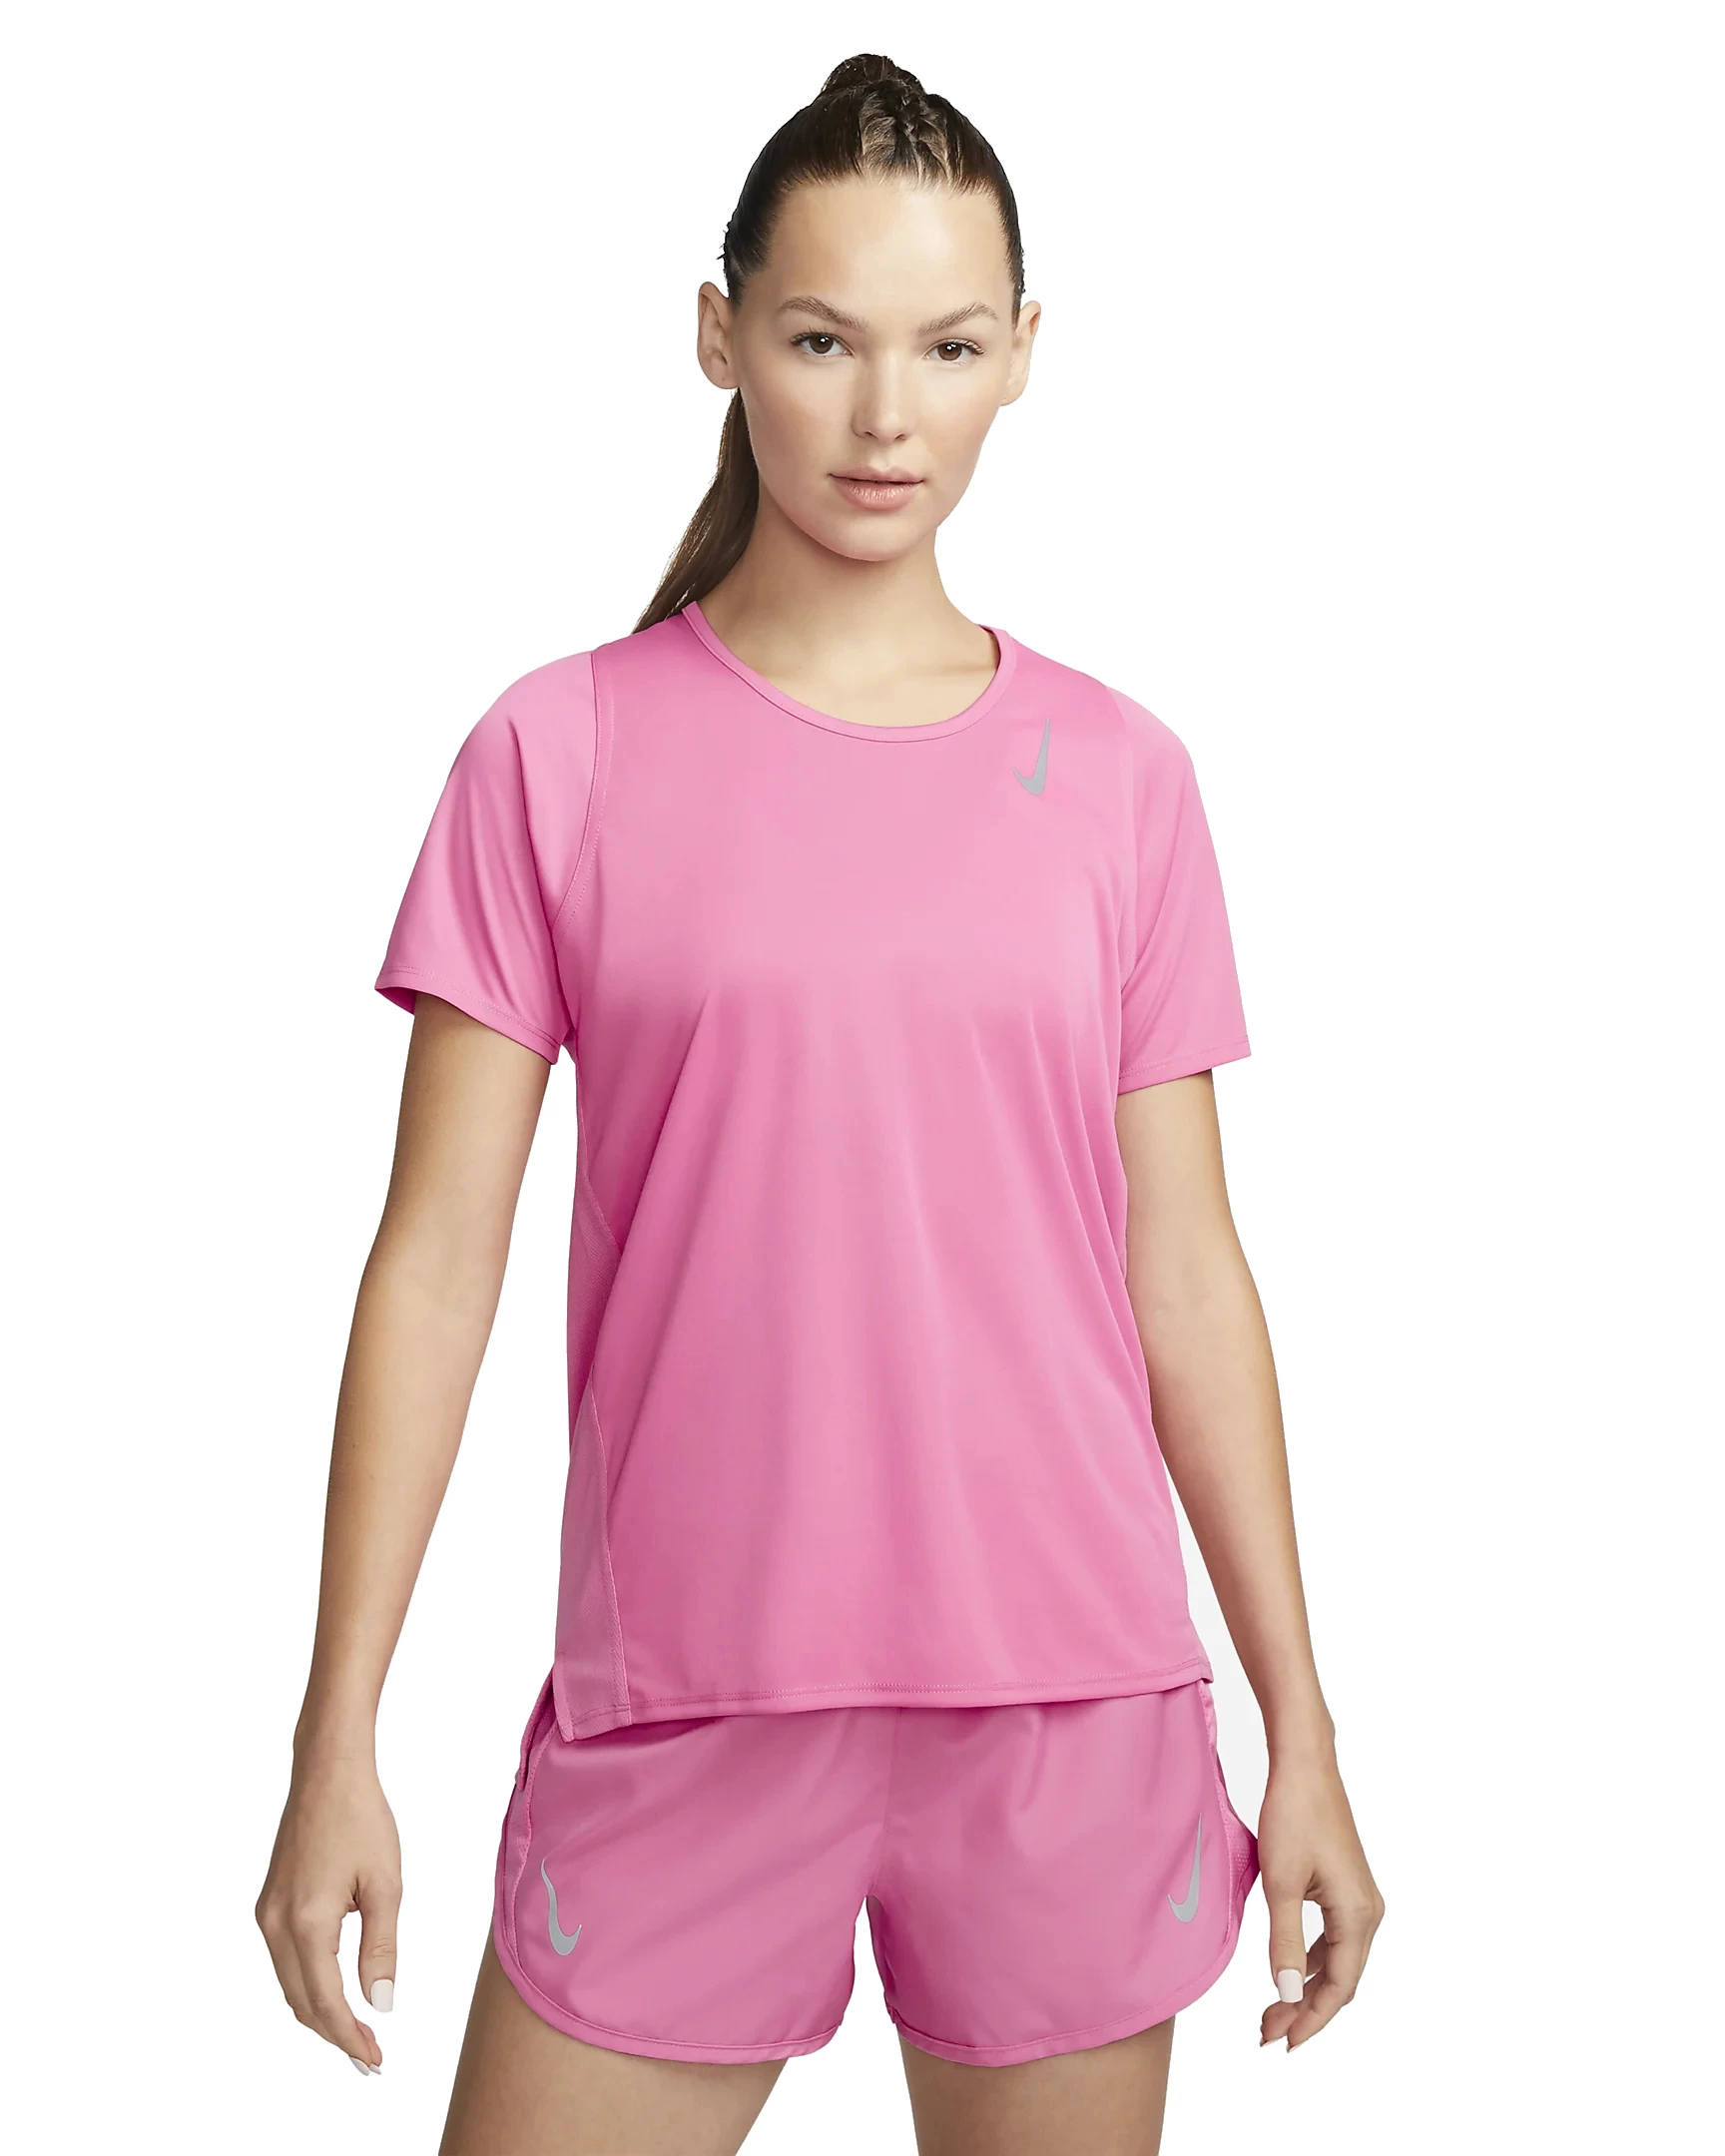 Nike Dri-Fit Race hardloopshirt dames